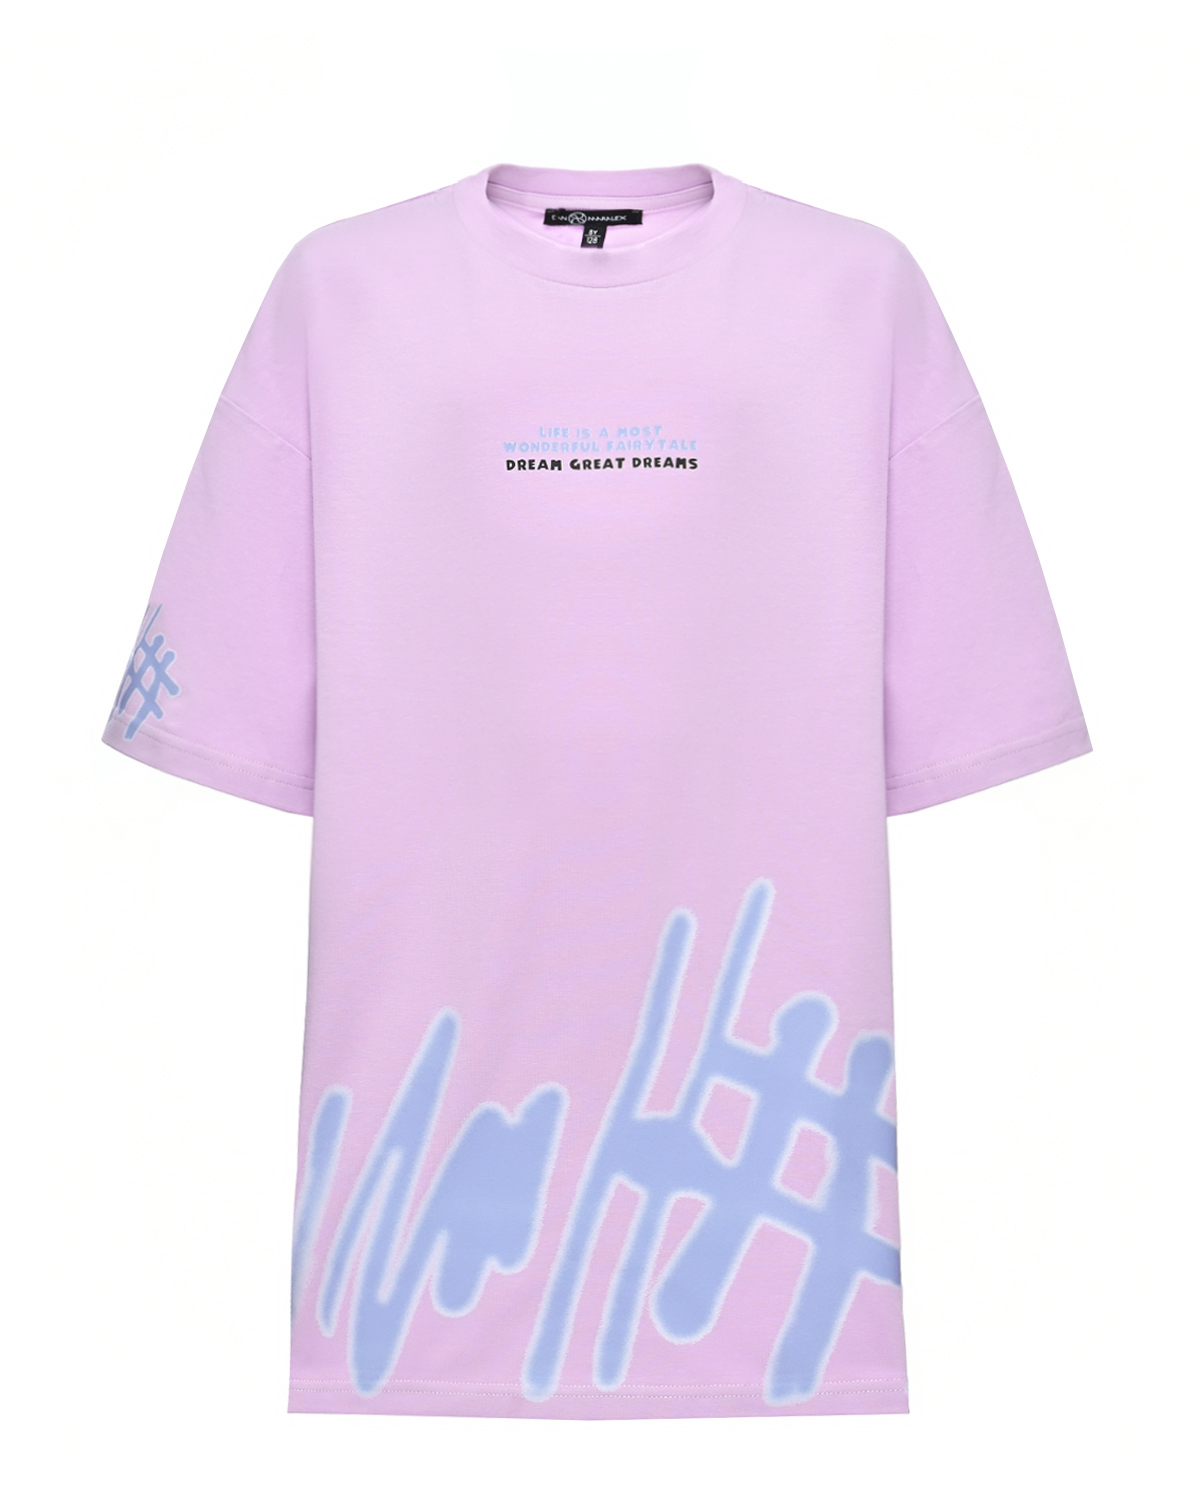 Платье-футболка, розовое Dan Maralex, размер 152, цвет нет цвета - фото 1